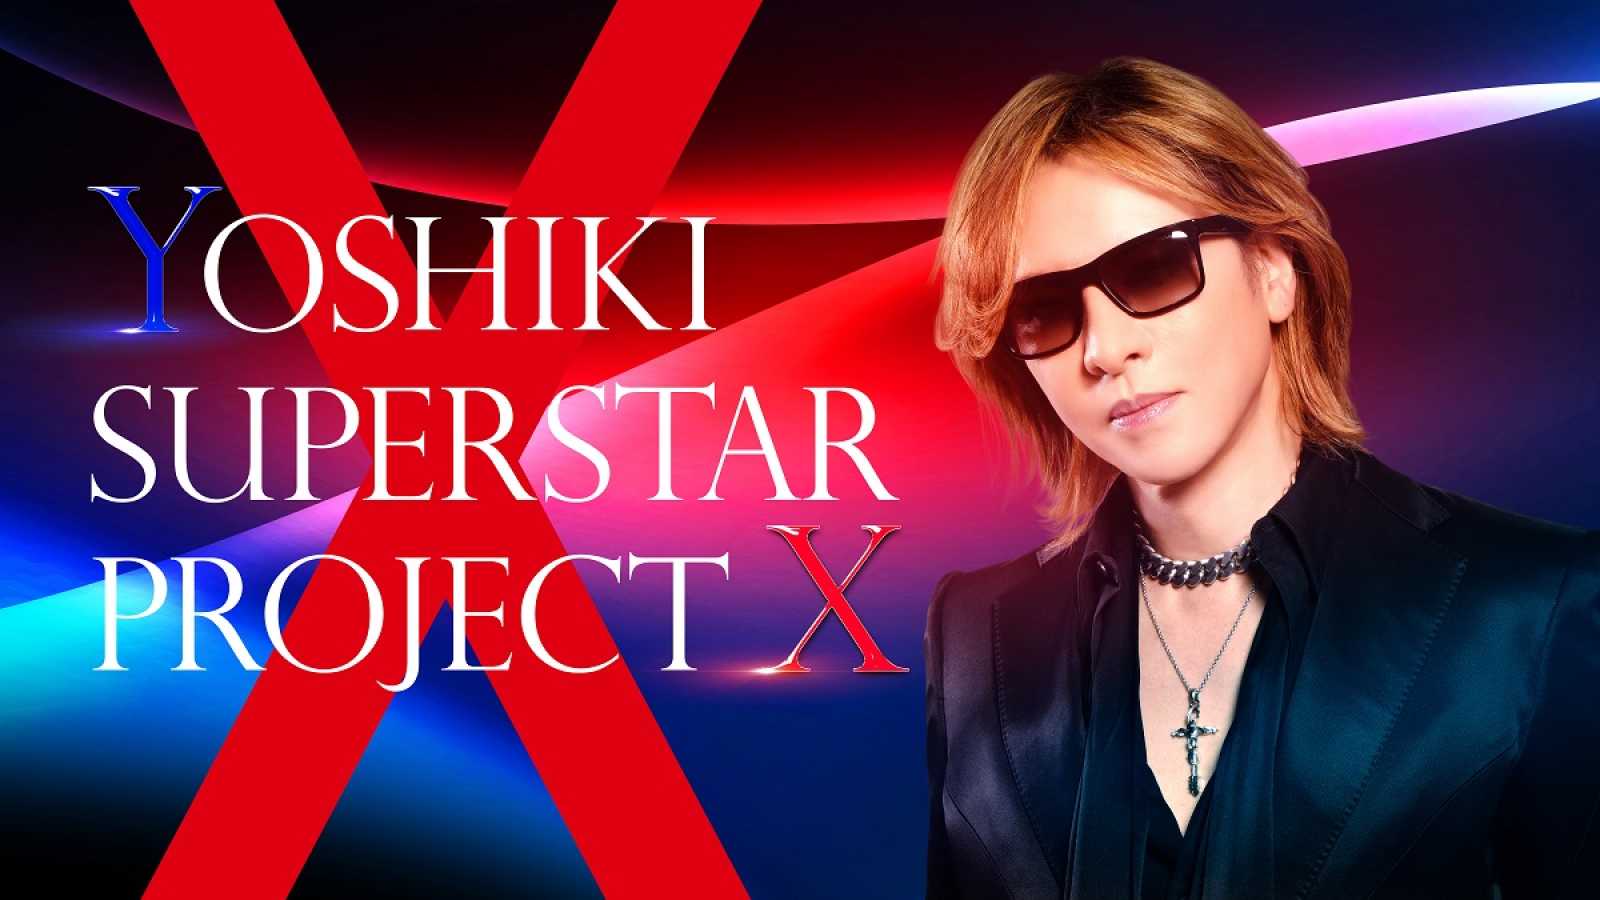 YOSHIKI SUPERSTAR PROJECT X anuncia su segundo período de postulación  © YOSHIKI SUPERSTAR PROJECT X. All rights reserved.